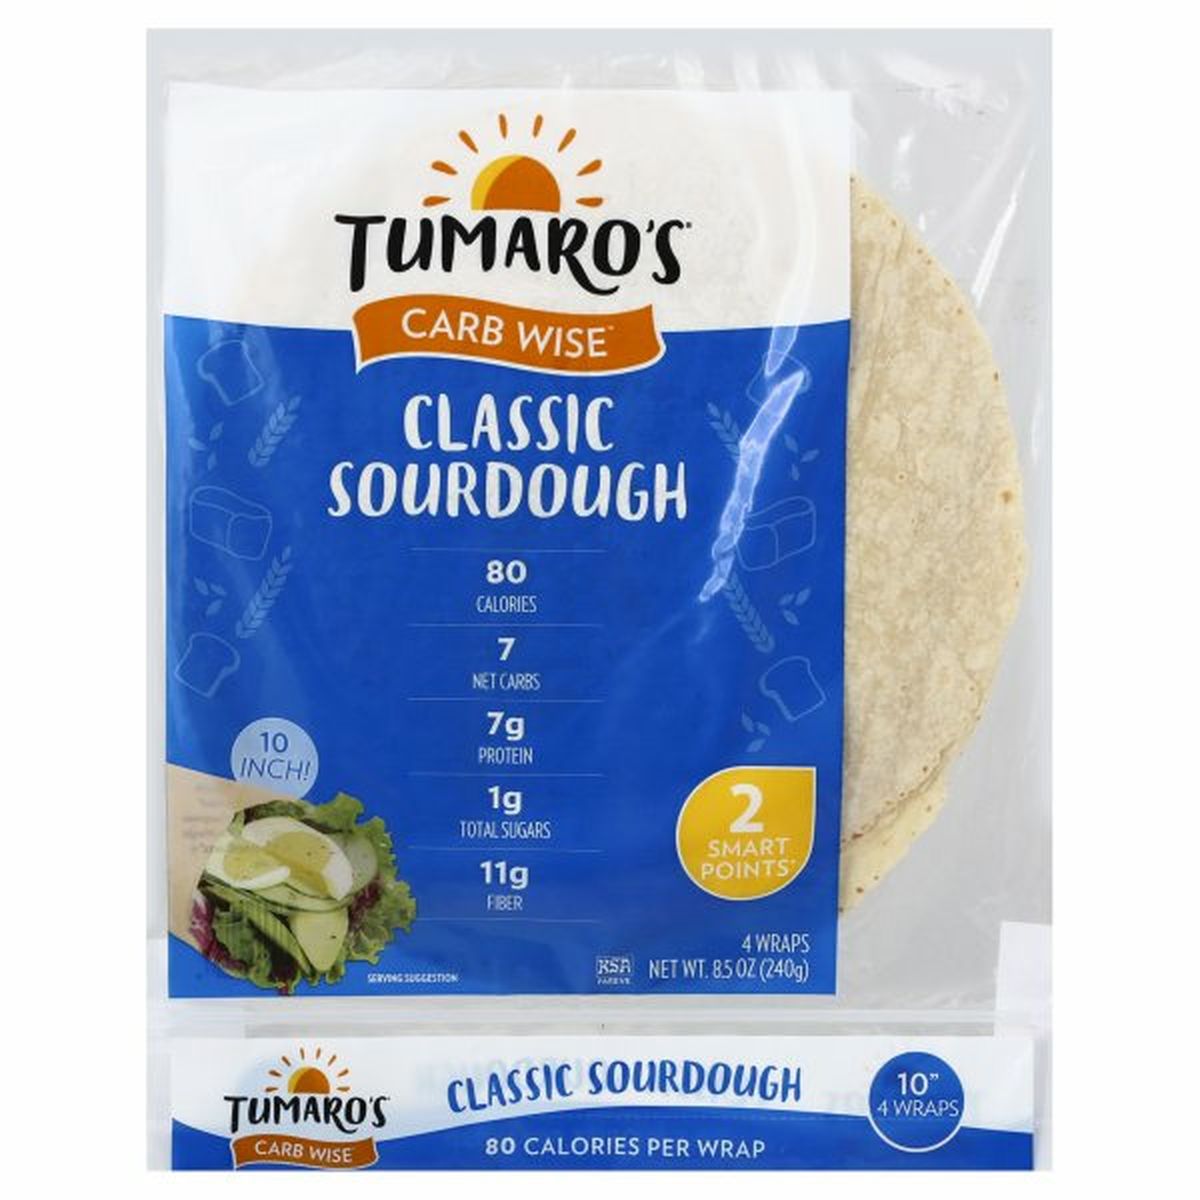 Calories in Tumaros Carb Wise Wraps, Classic Sourdough